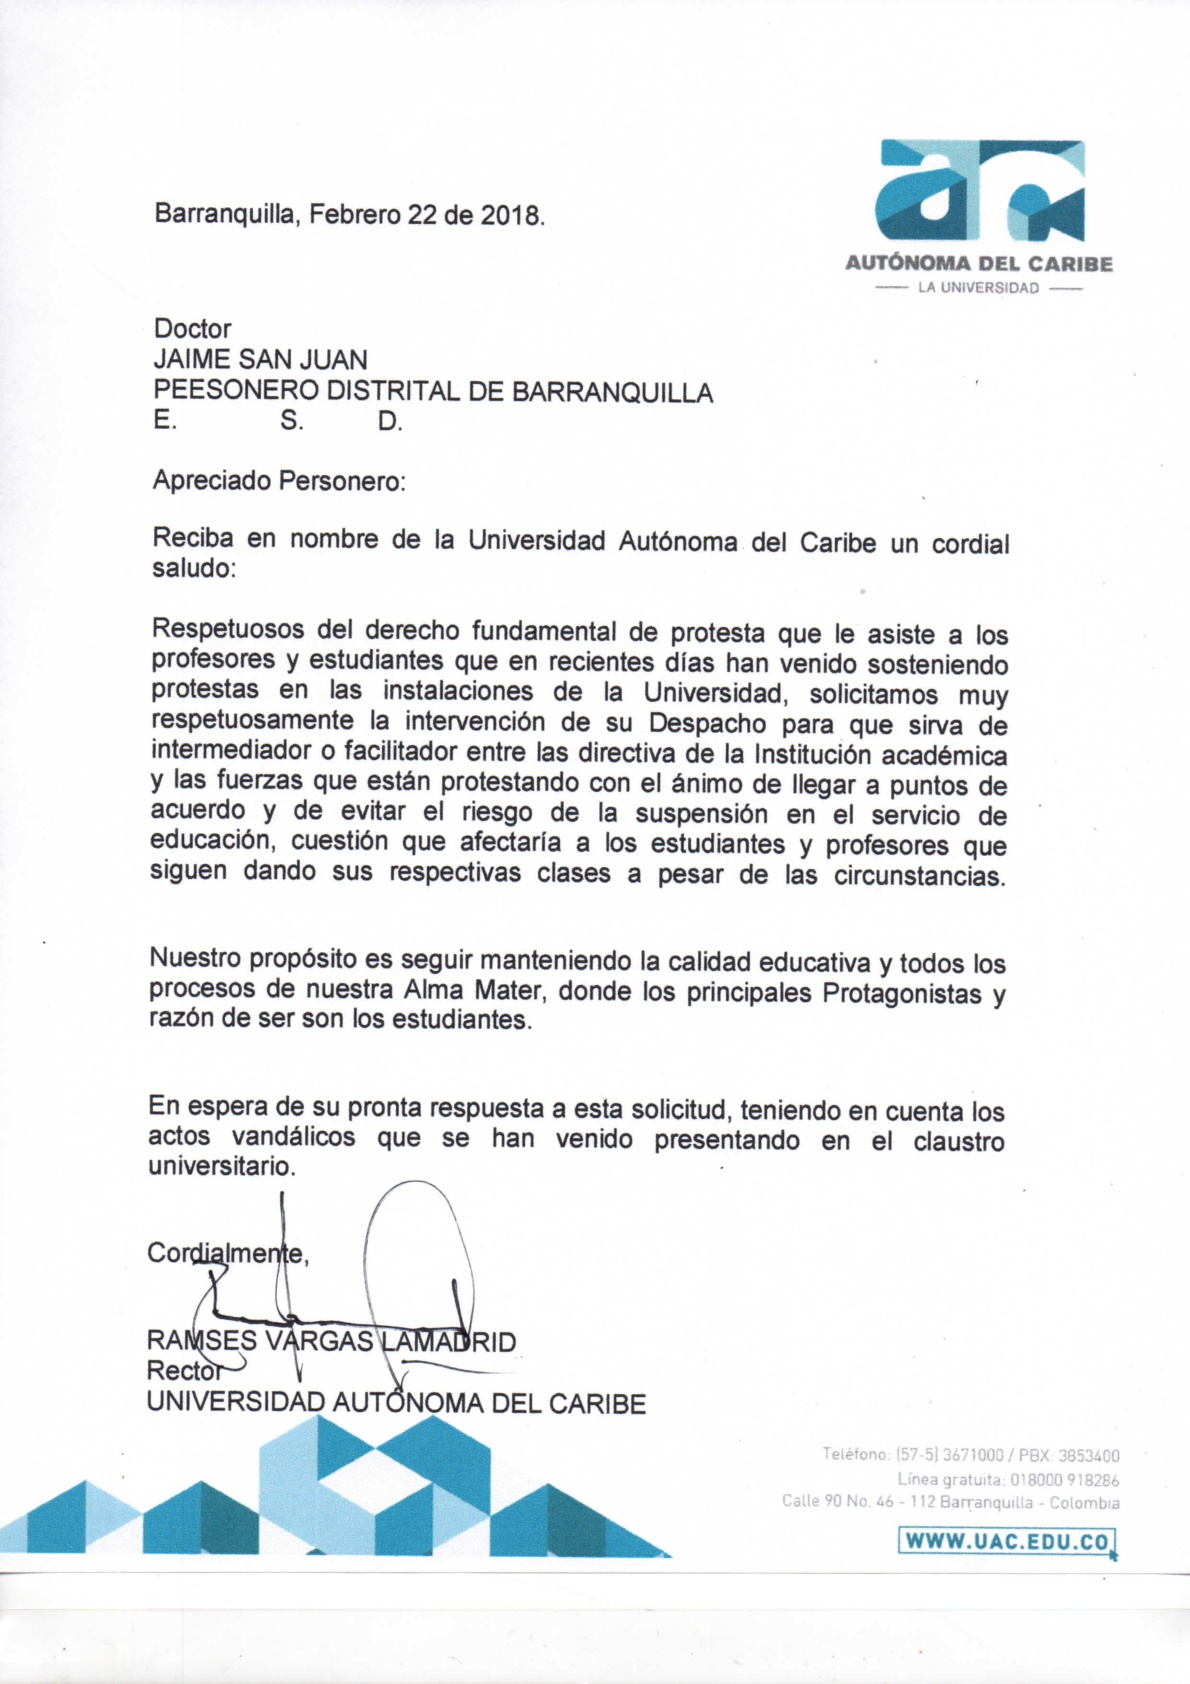 Carta de la Universidad Autónoma del Caribe dirigida al Personero de Barranquilla, Jaime Sanjuán.